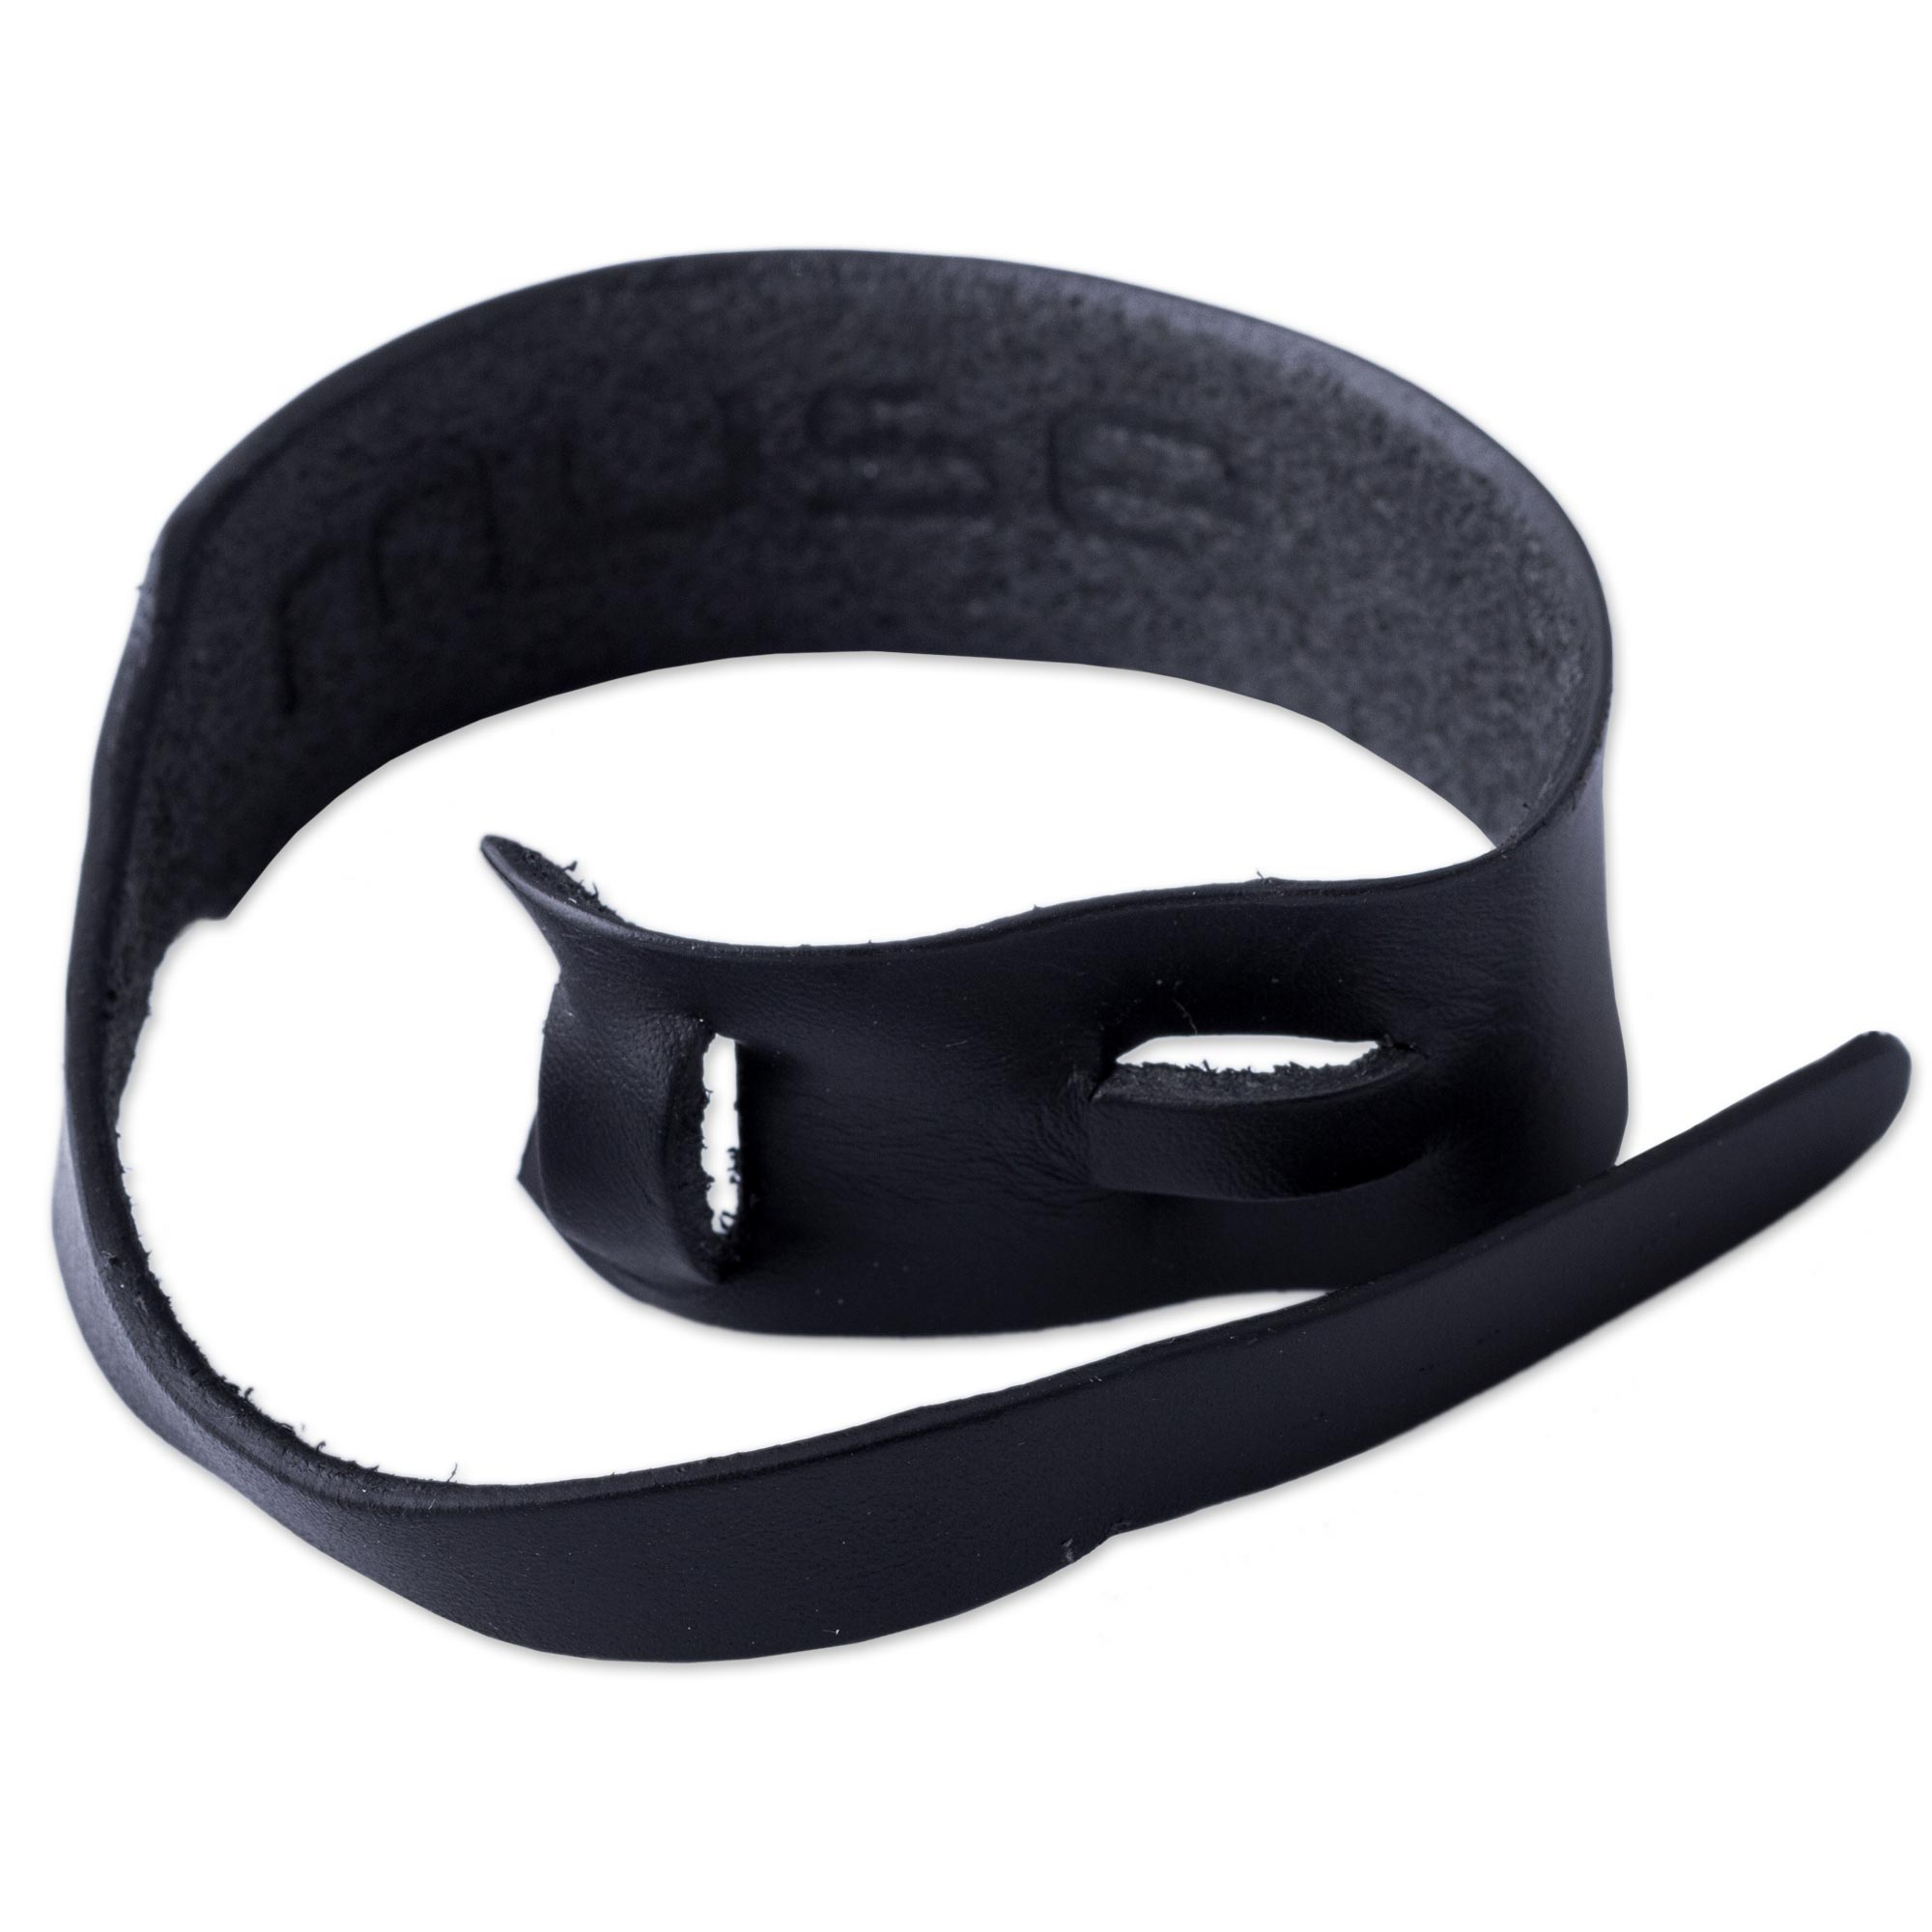 Modern Wristband Bracelet in Black Quality Leather - Nazca Black | NOVICA